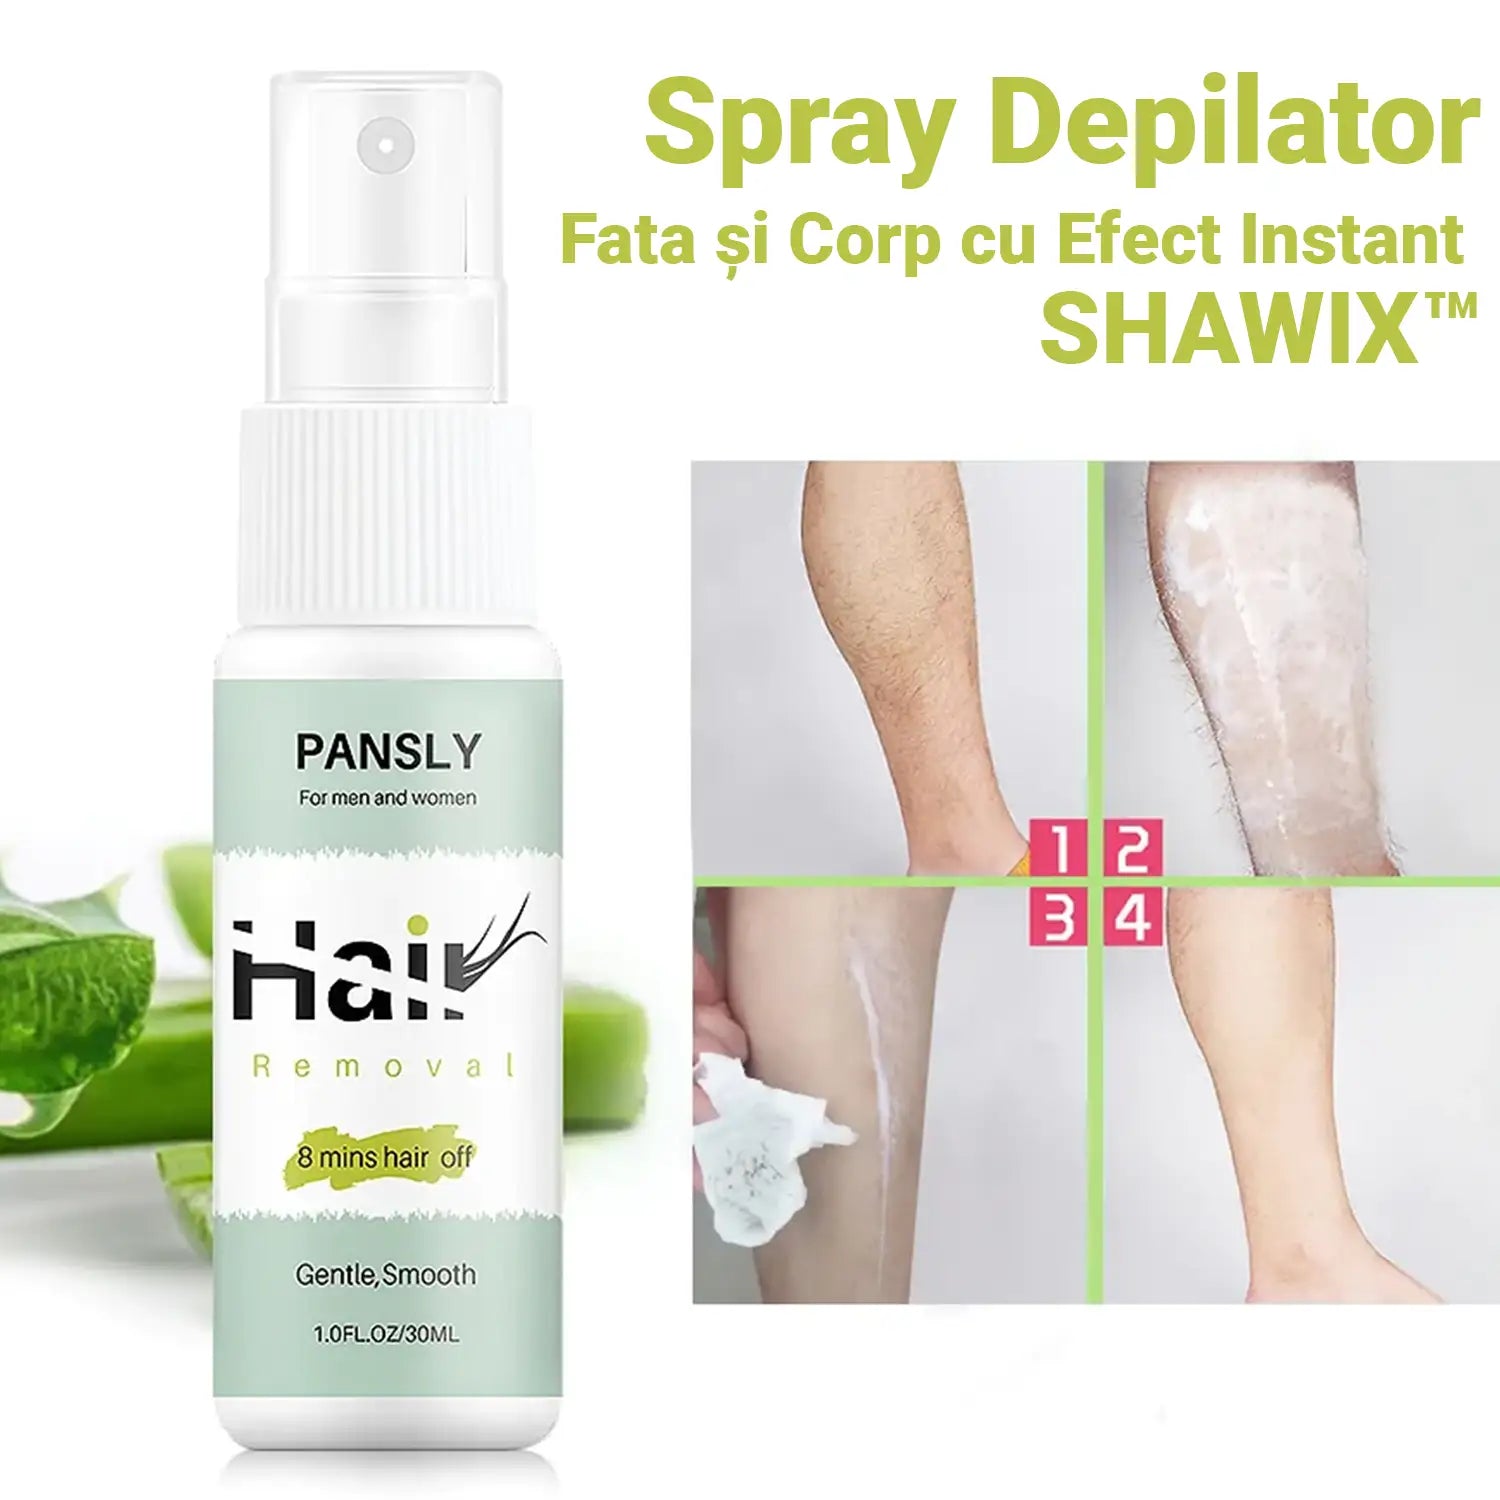 Spray Depilator Fata si Corp cu Efect Instant SHAWIX™